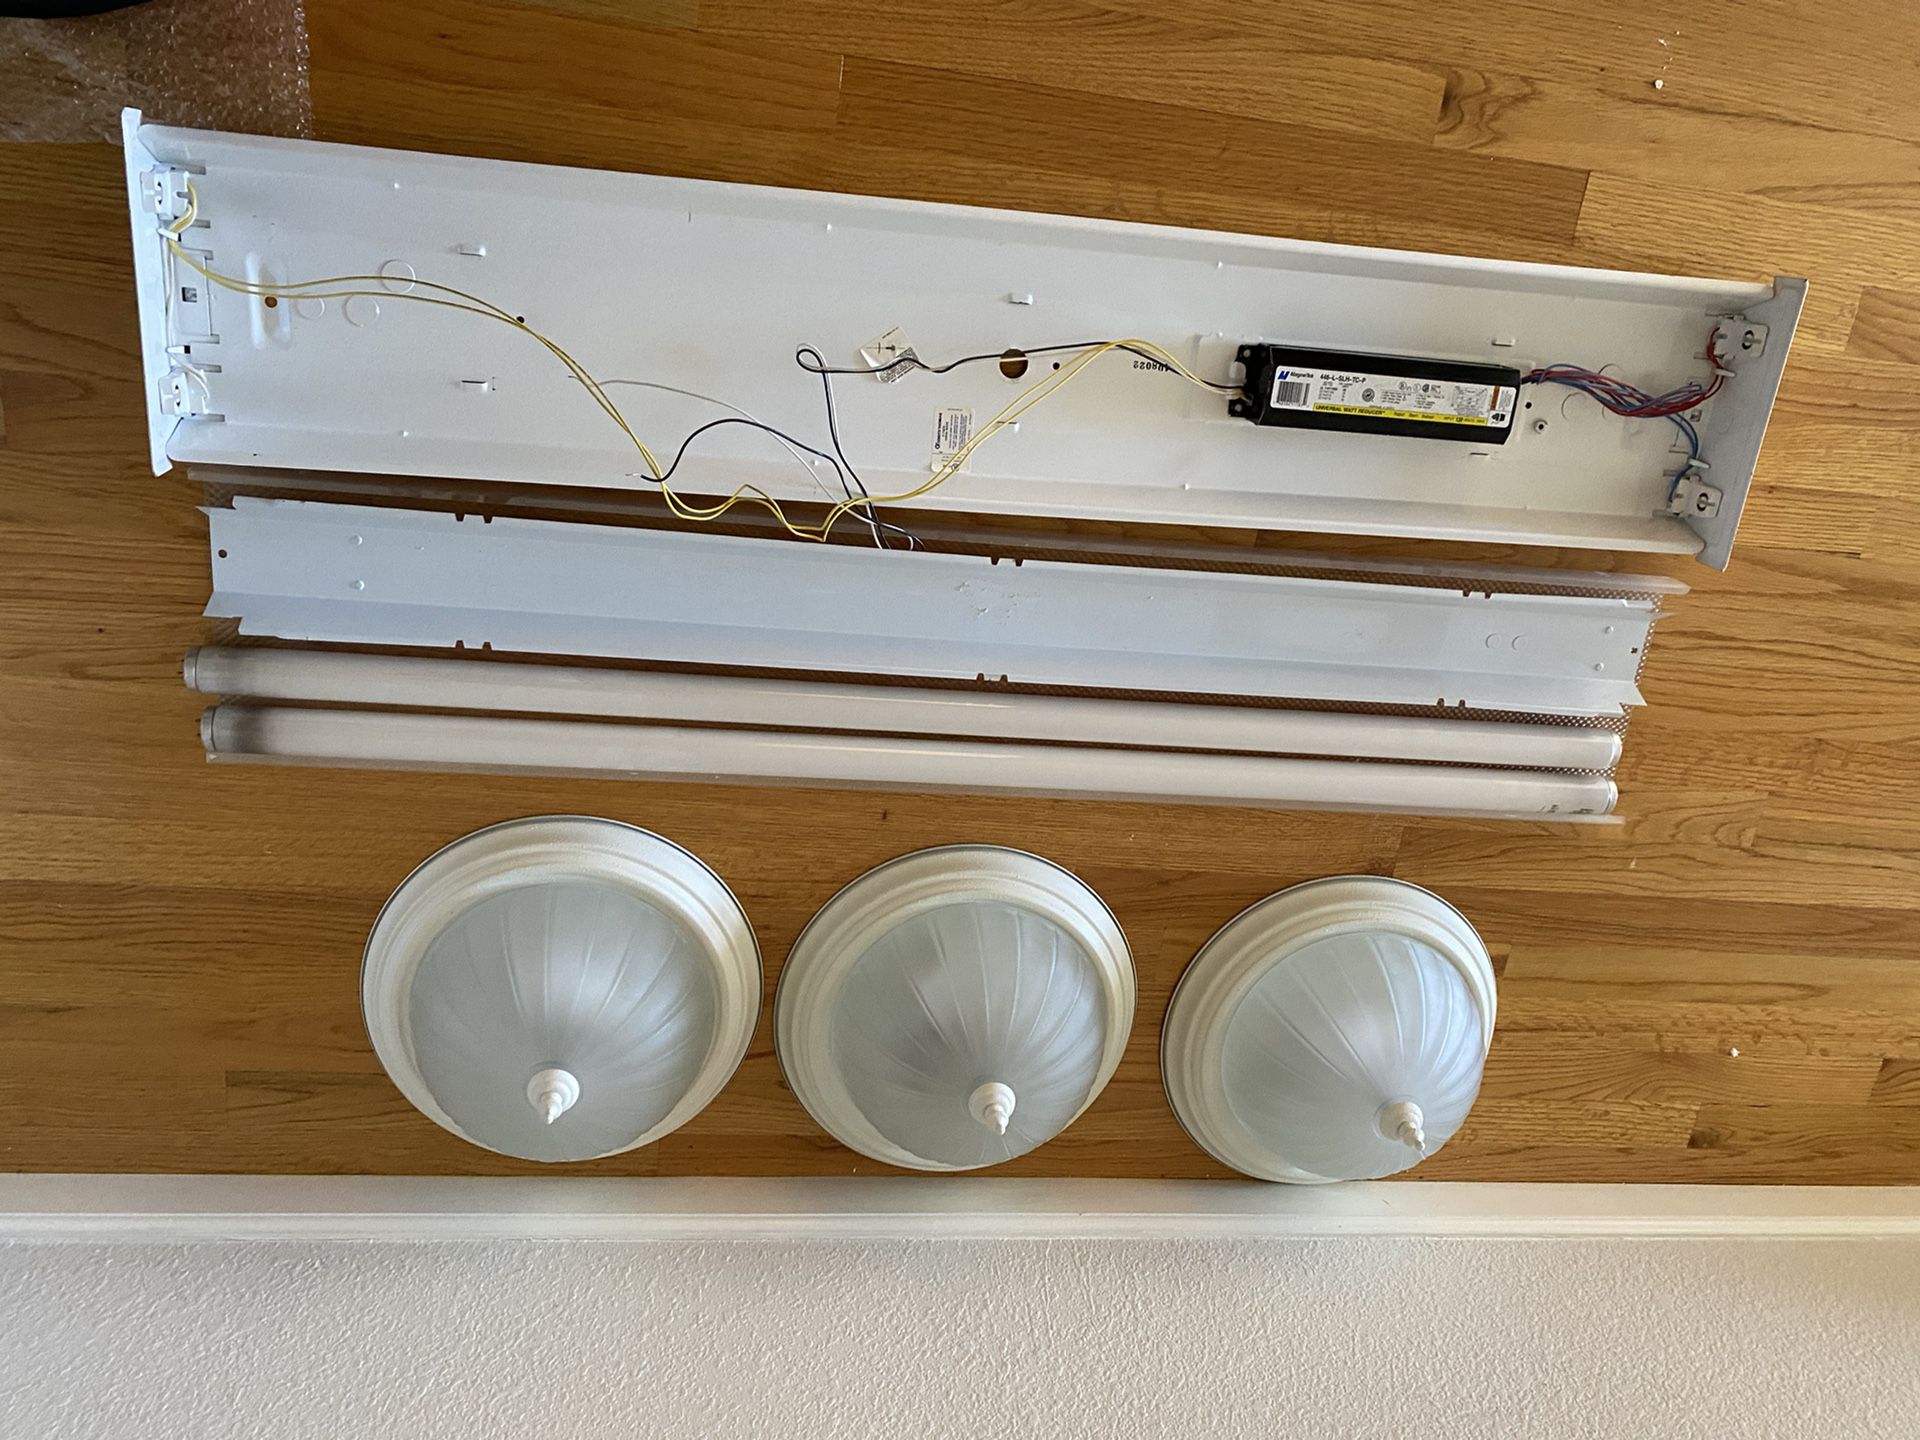 4 Light For House Kitchen Construction Tools Appliance’s Led Bulbs  Milwaukee Makita Dewalt Ryobi Diablo Senco Hitachi 